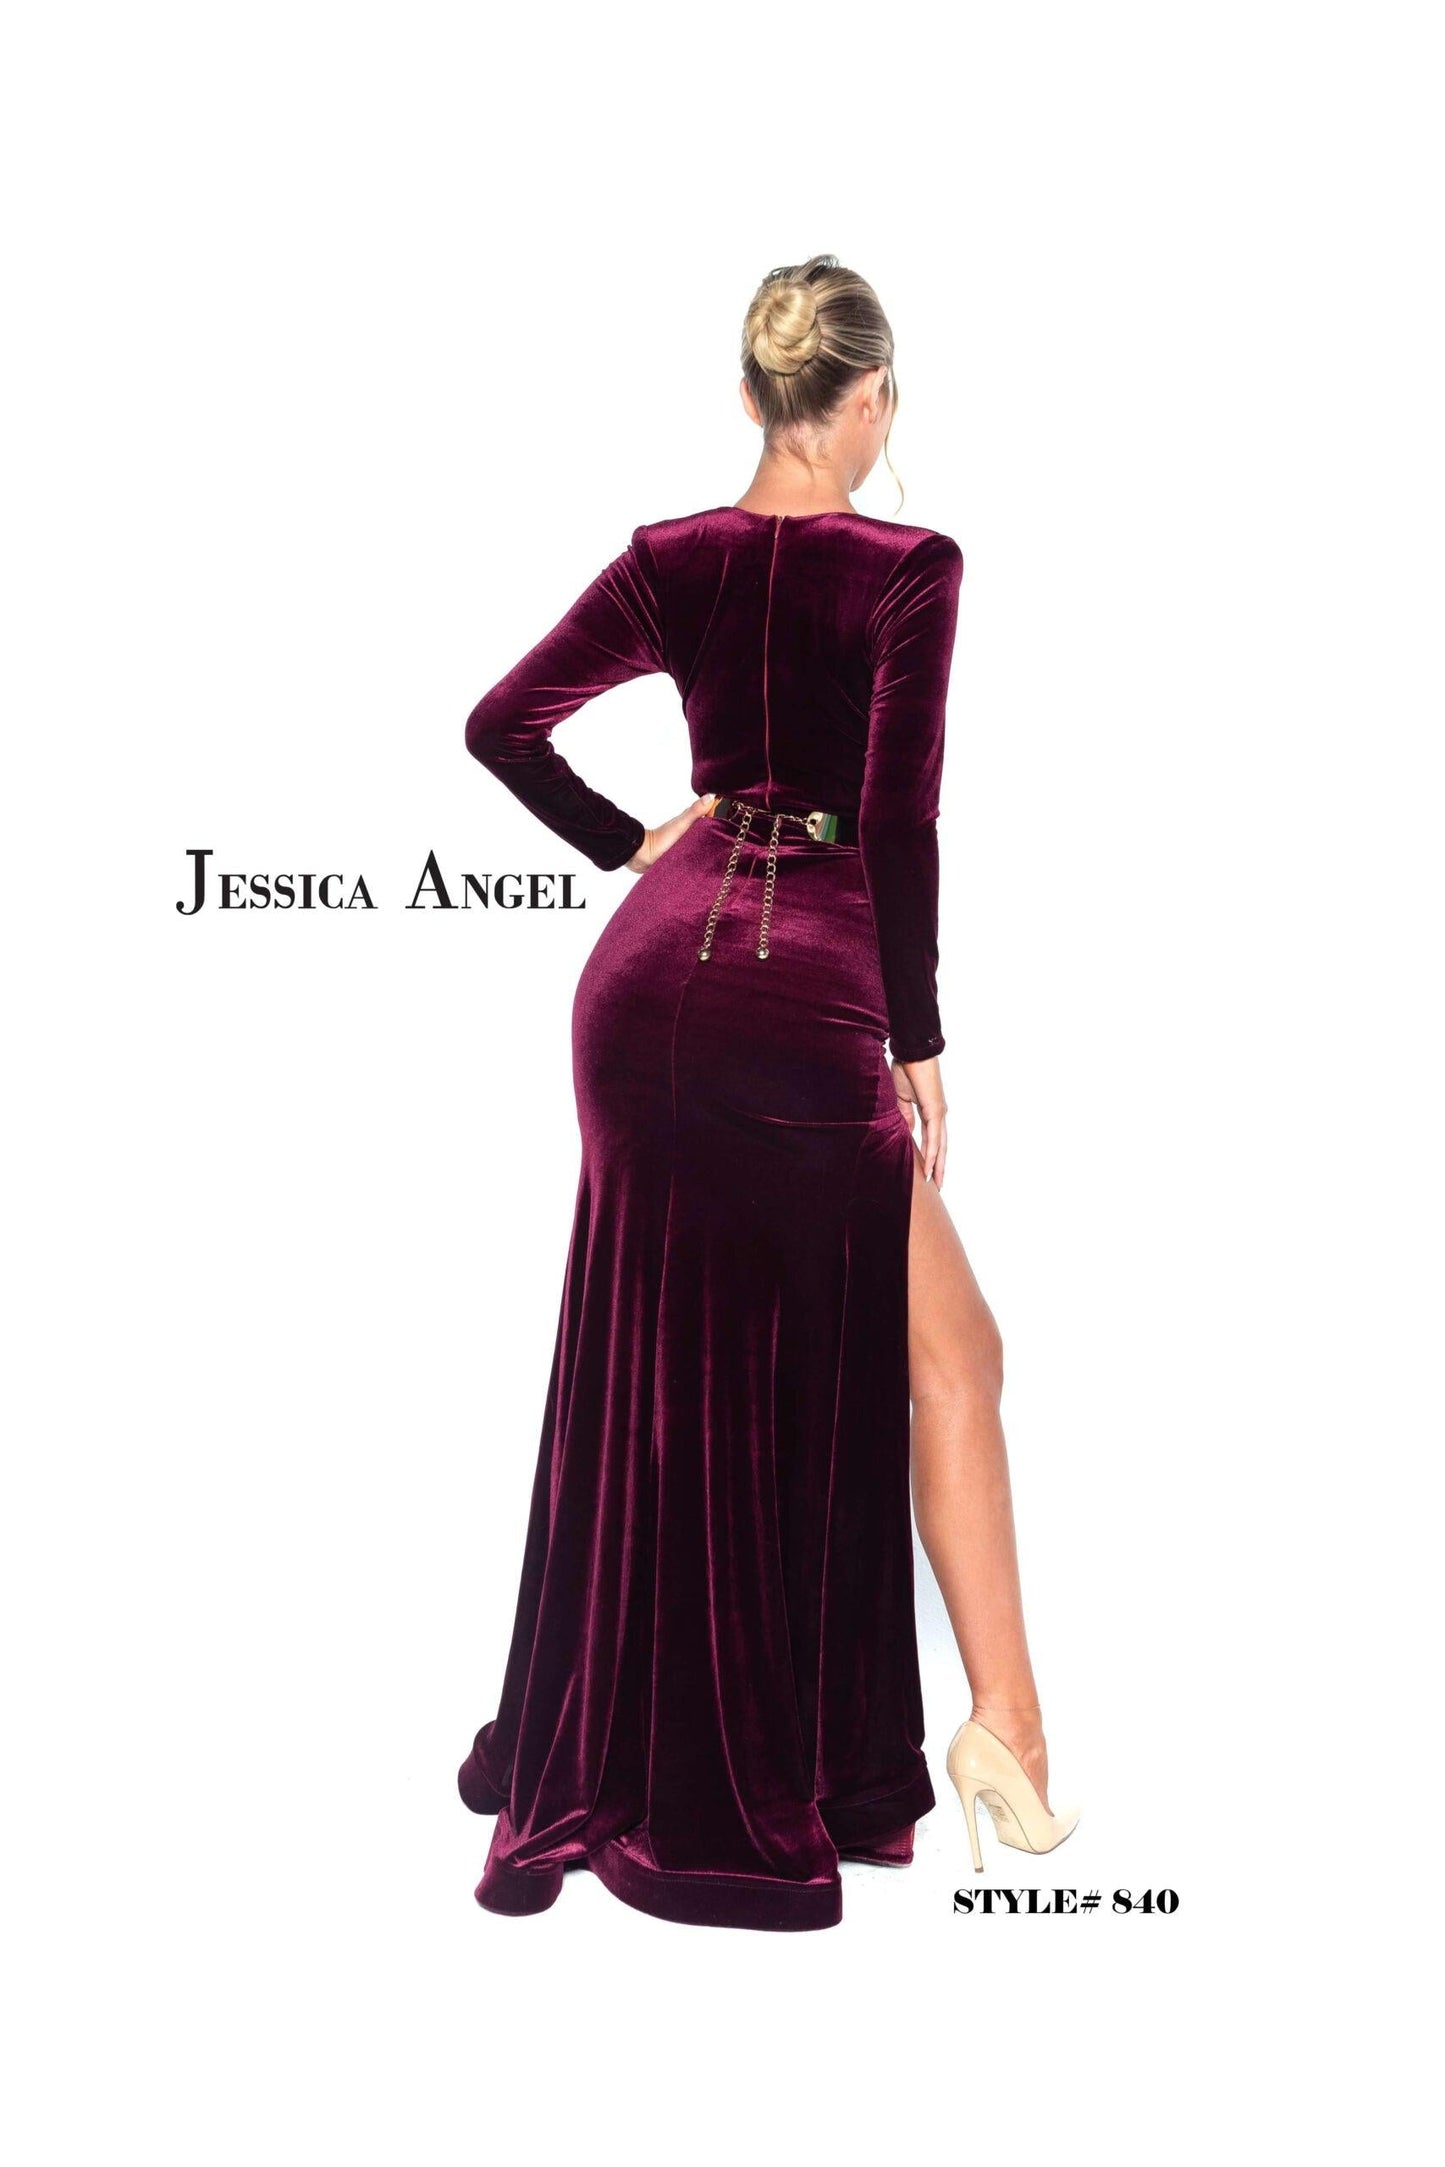 Jessica Angel Long Formal Fitted Velvet Dress 840 - The Dress Outlet